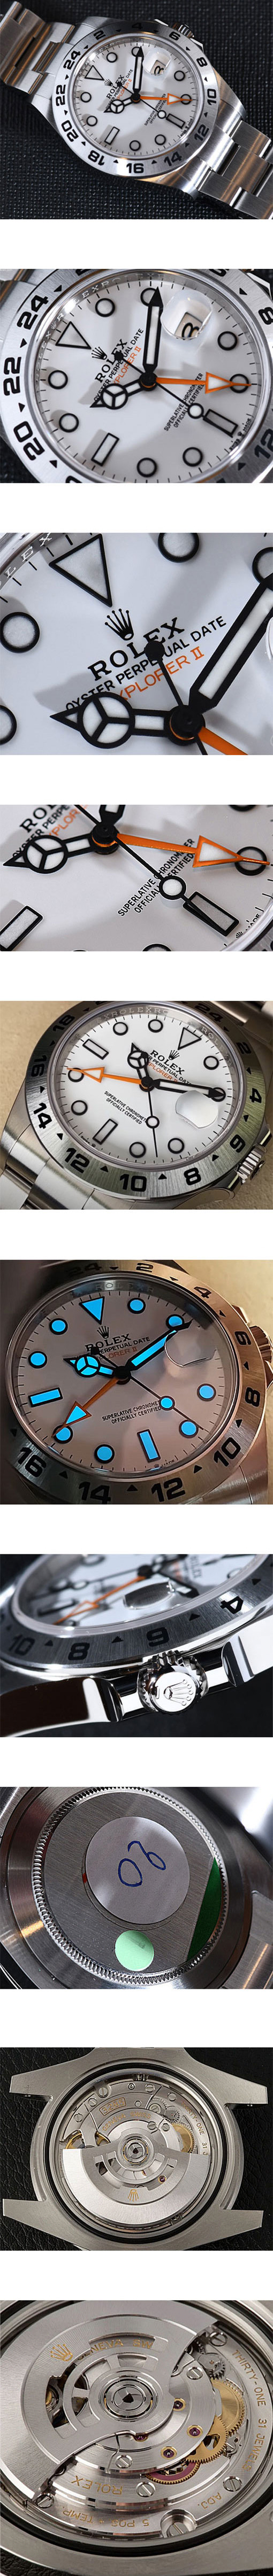 【Noob工場格安腕時計通販】ロレックス エクスプローラー M226570レプリカ時計